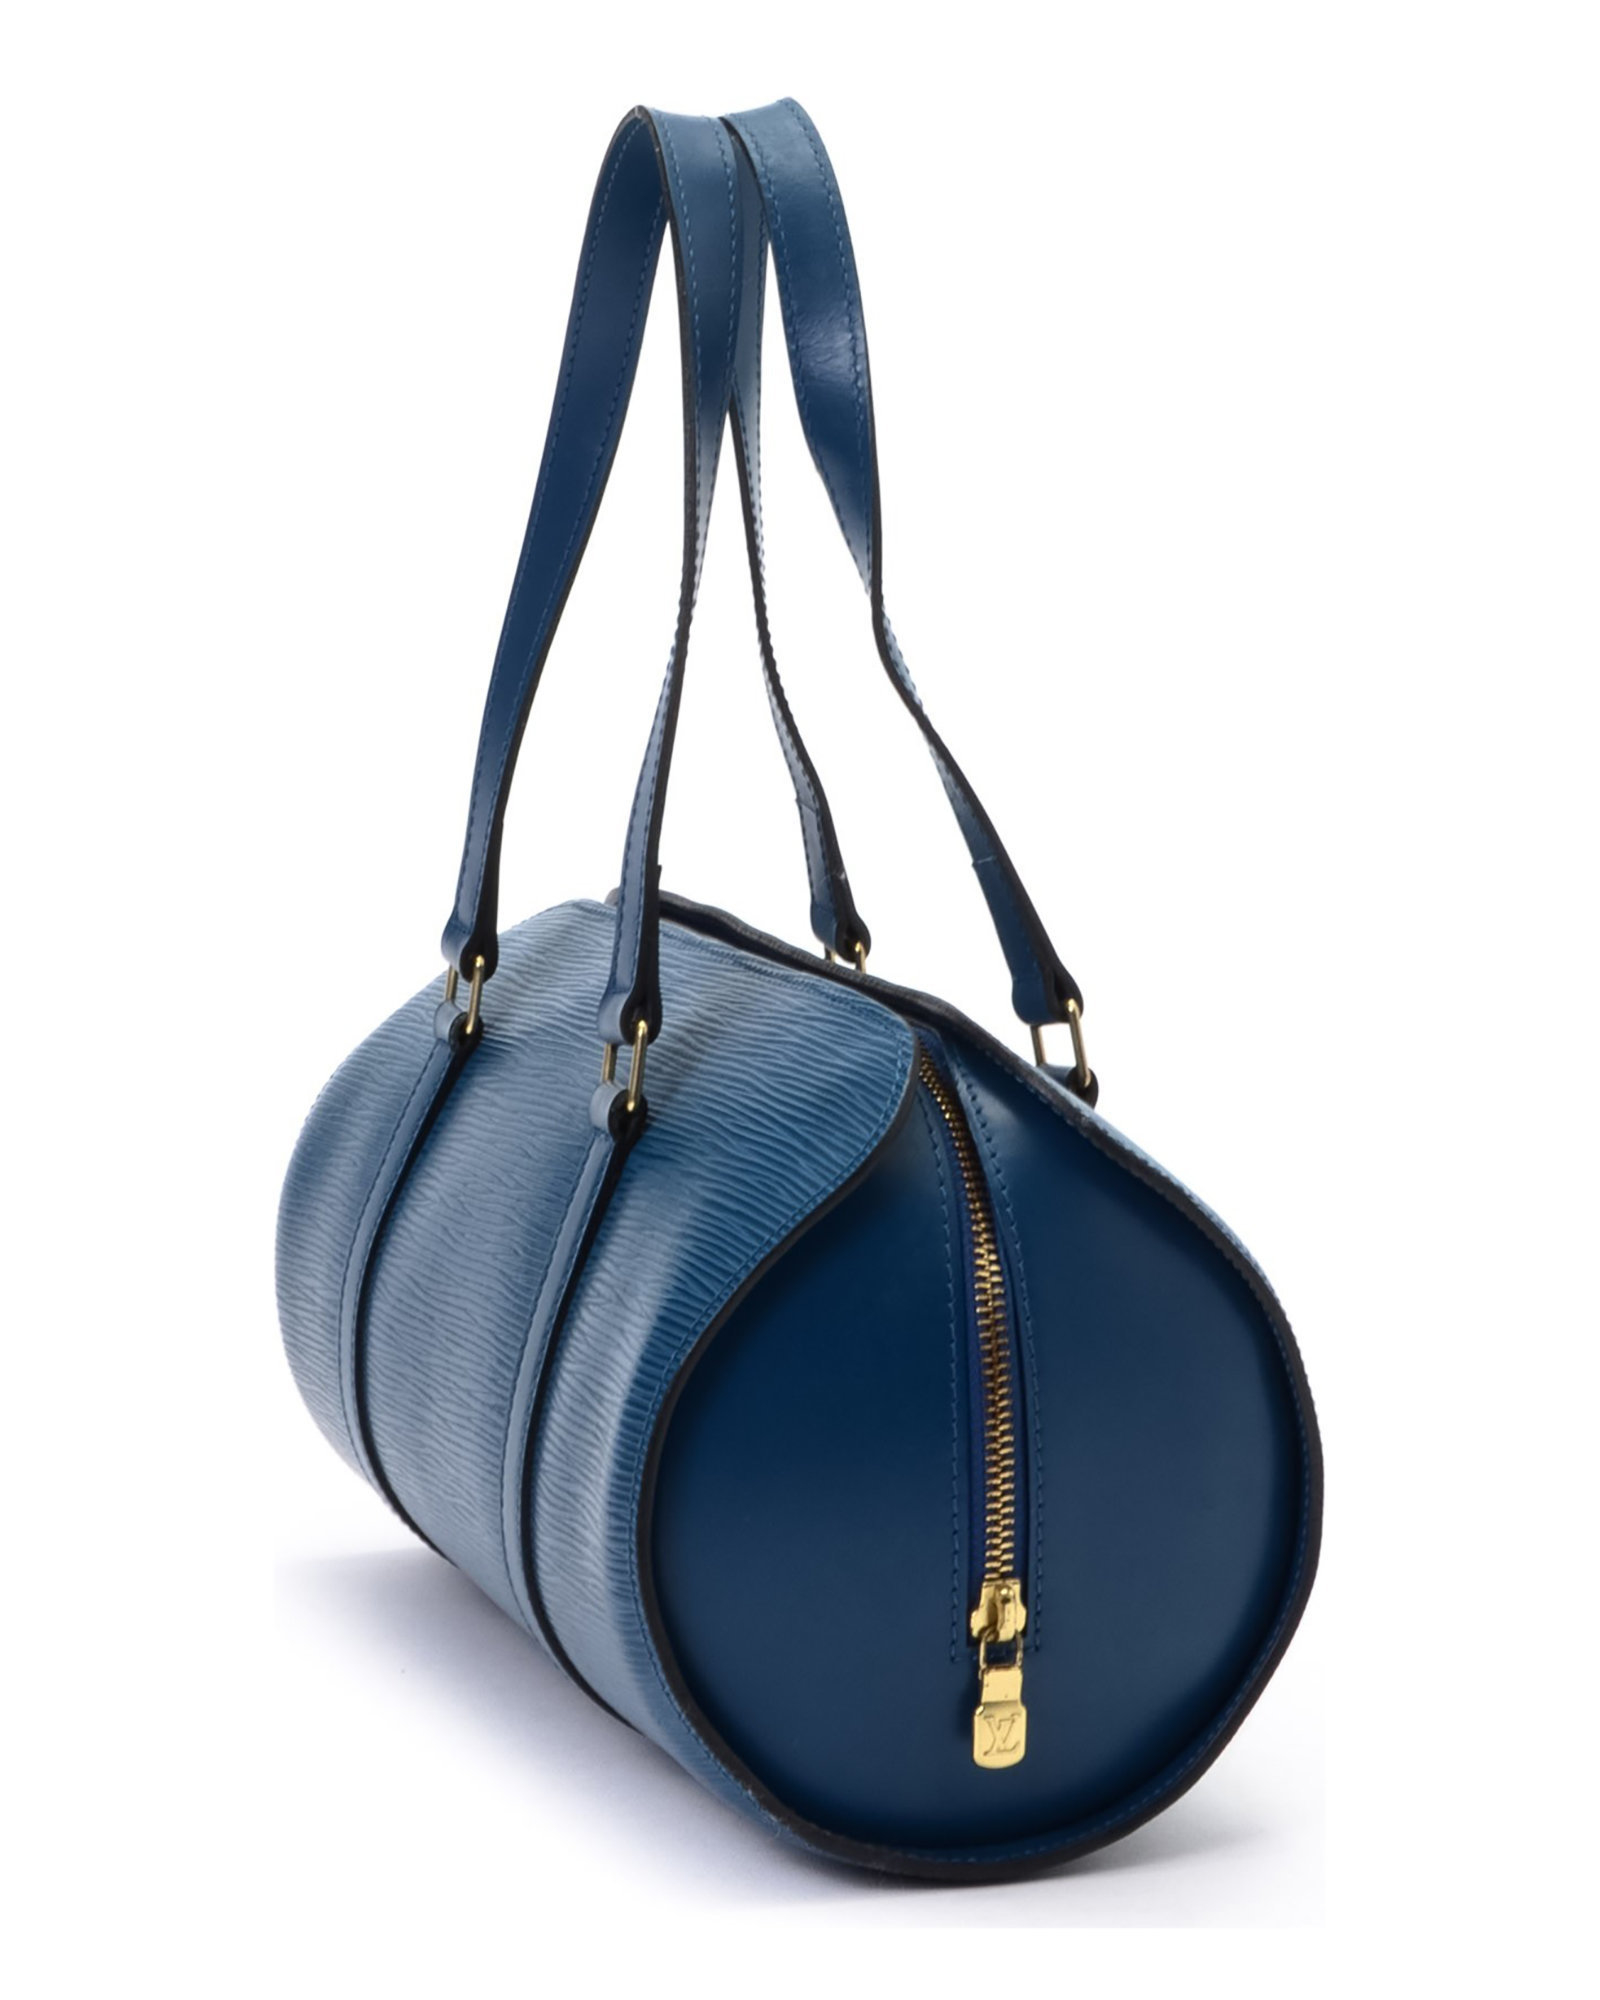 Lyst - Louis Vuitton Handbag - Vintage in Blue